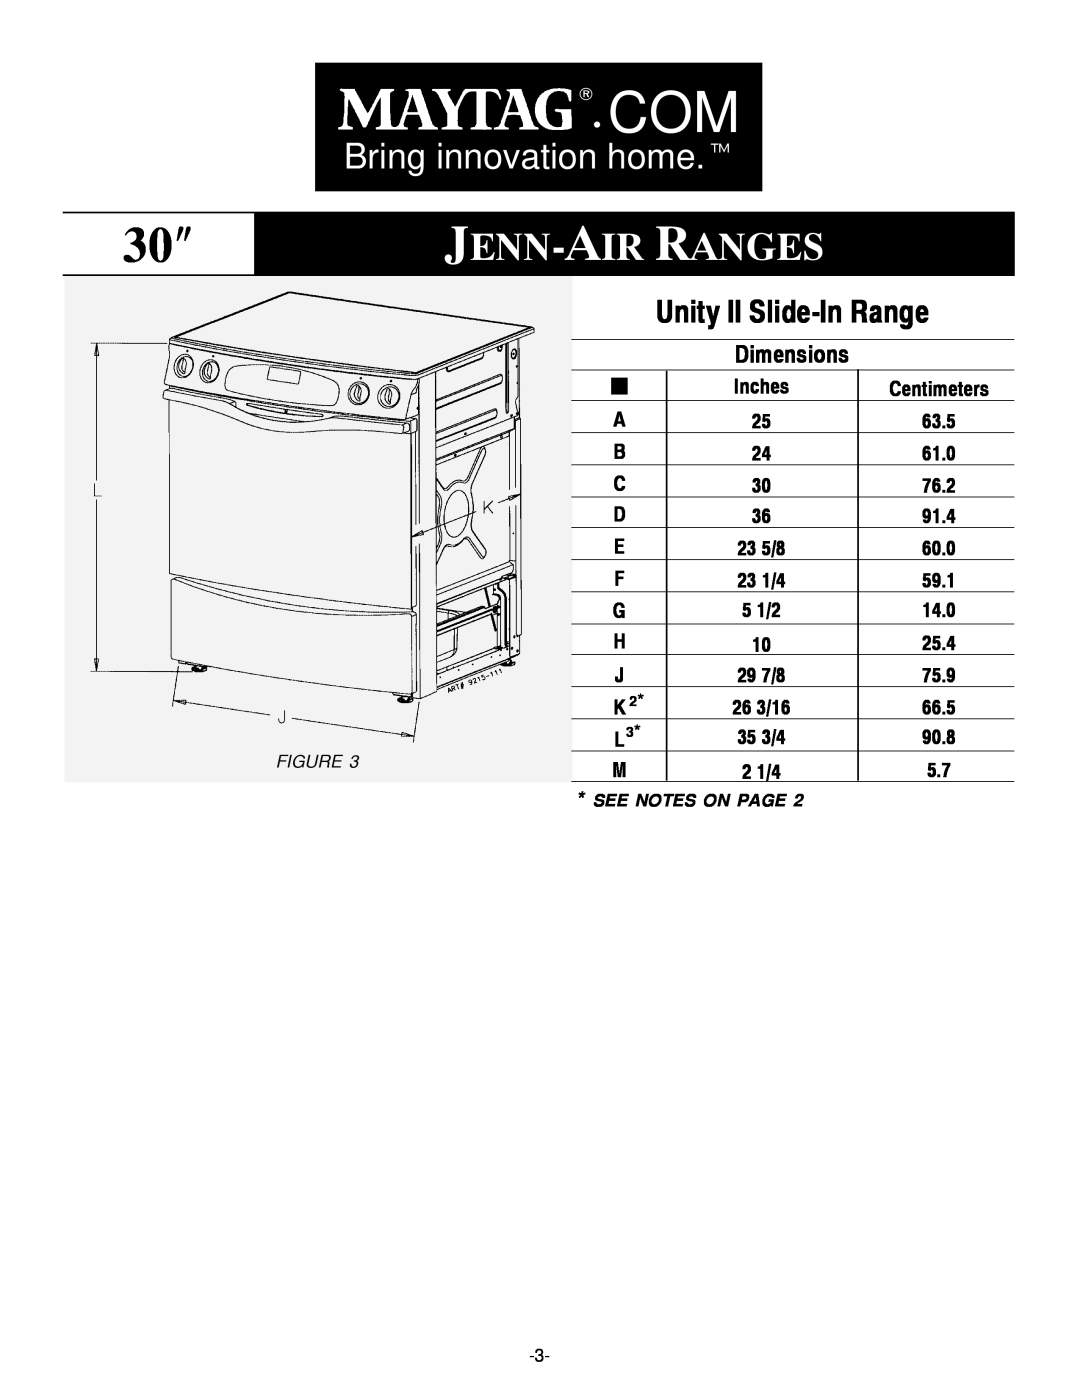 Jenn-Air installation manual Unity II Slide-In Range, Dimensions, Jenn-Air Ranges, Bring innovation home.t 